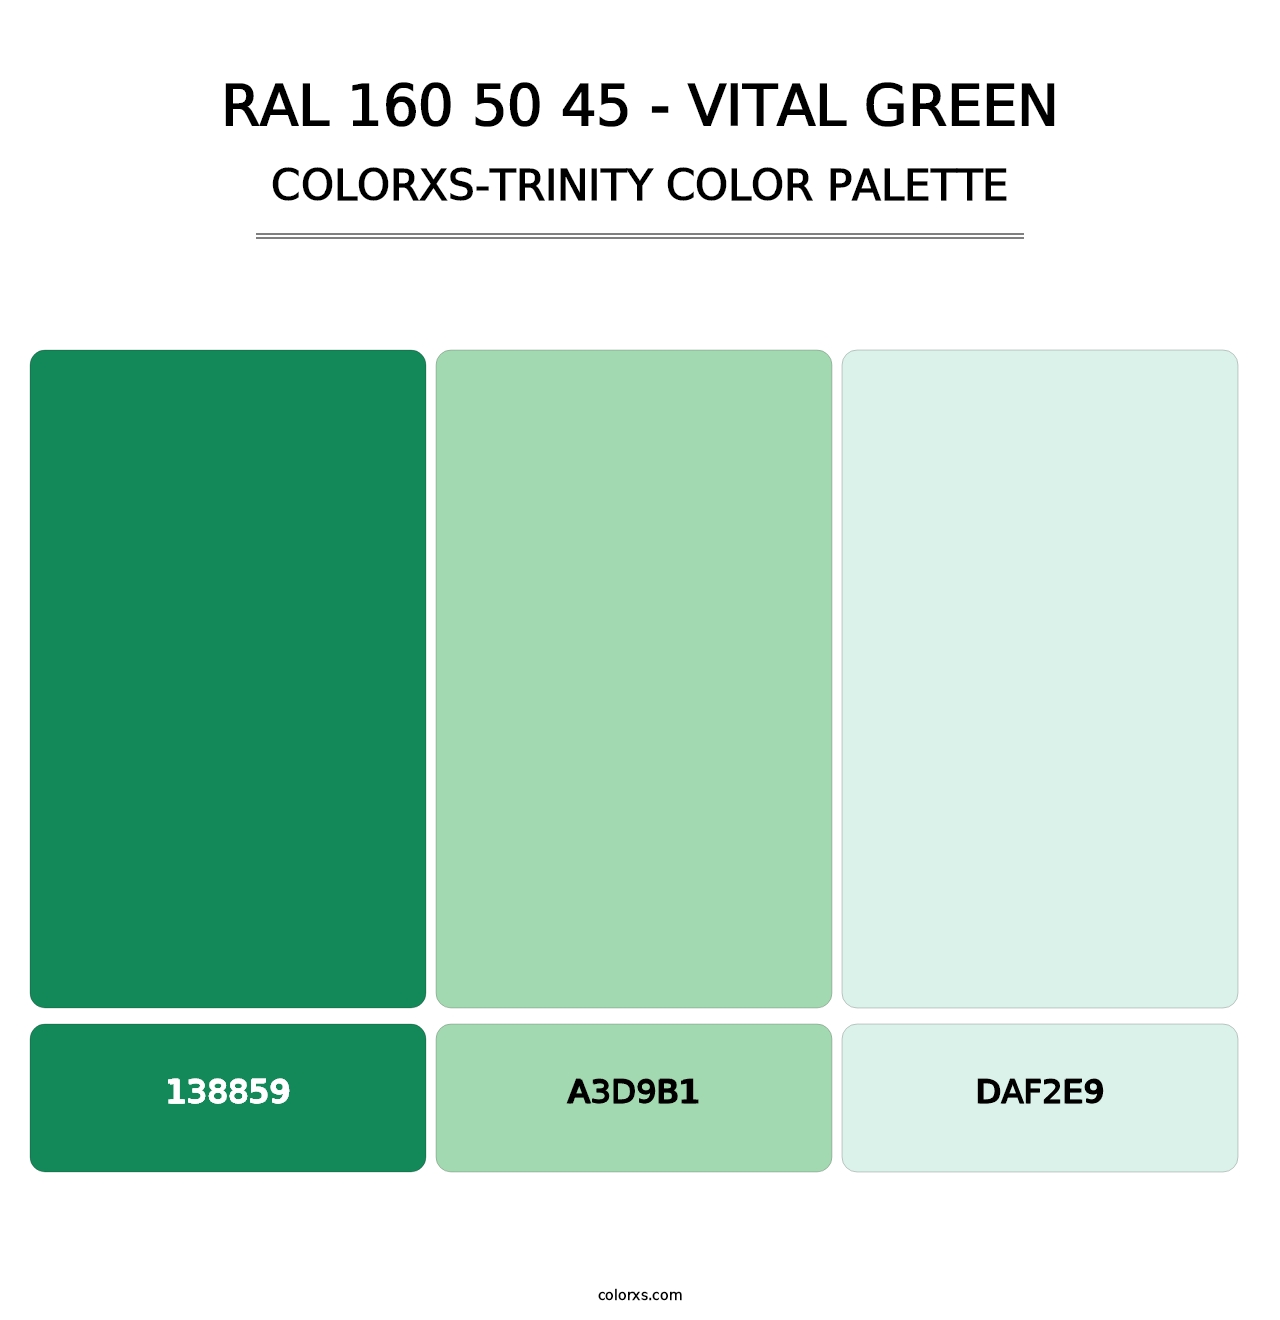 RAL 160 50 45 - Vital Green - Colorxs Trinity Palette